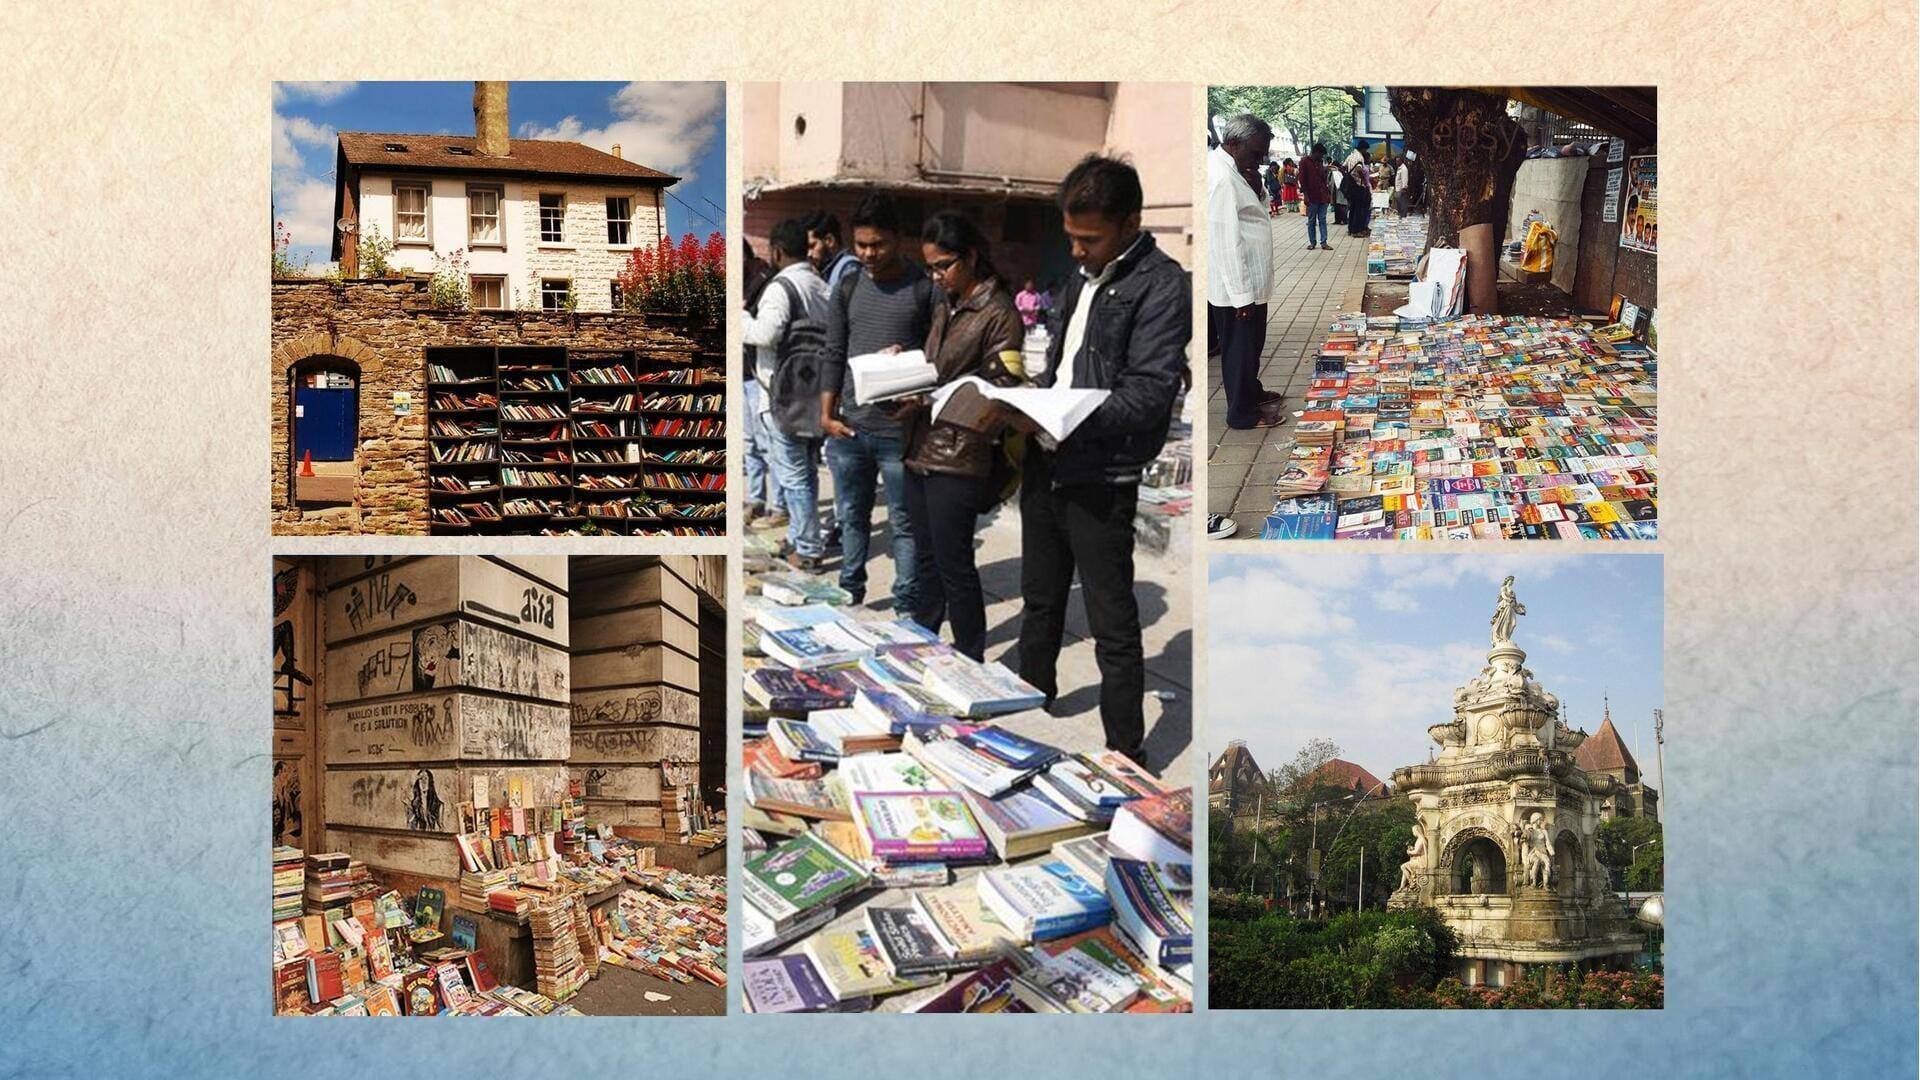 Kota-kota buku di India yang wajib dikunjungi oleh setiap kutu buku